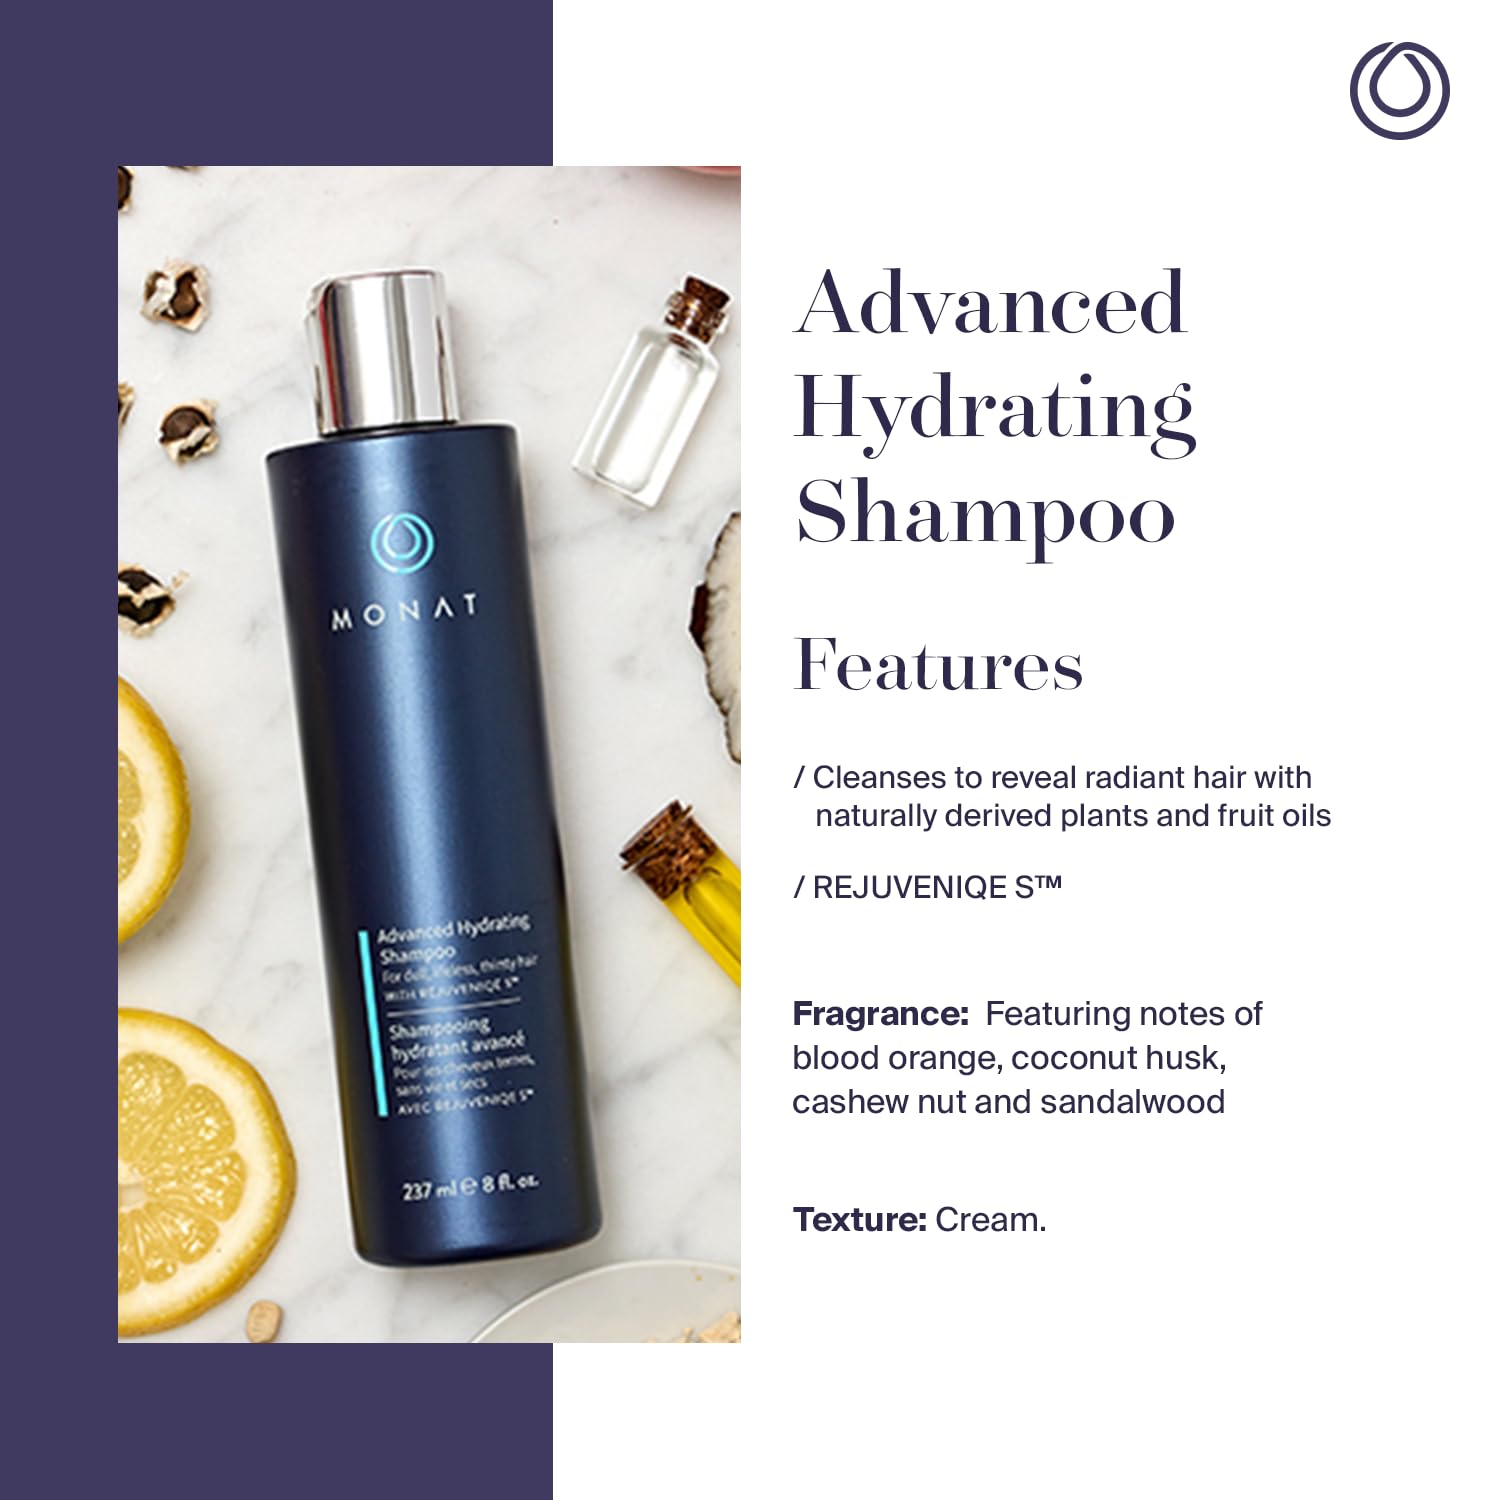 MONAT Advanced Hydrating Shampoo Infused with Rejuveniqe S - Lightweight Hair Shampoo/Moisturizing Shampoo That Nourishes Fine to Medium Hair - Net Wt. 237 ml / 8 fl. oz. : Beauty & Personal Care